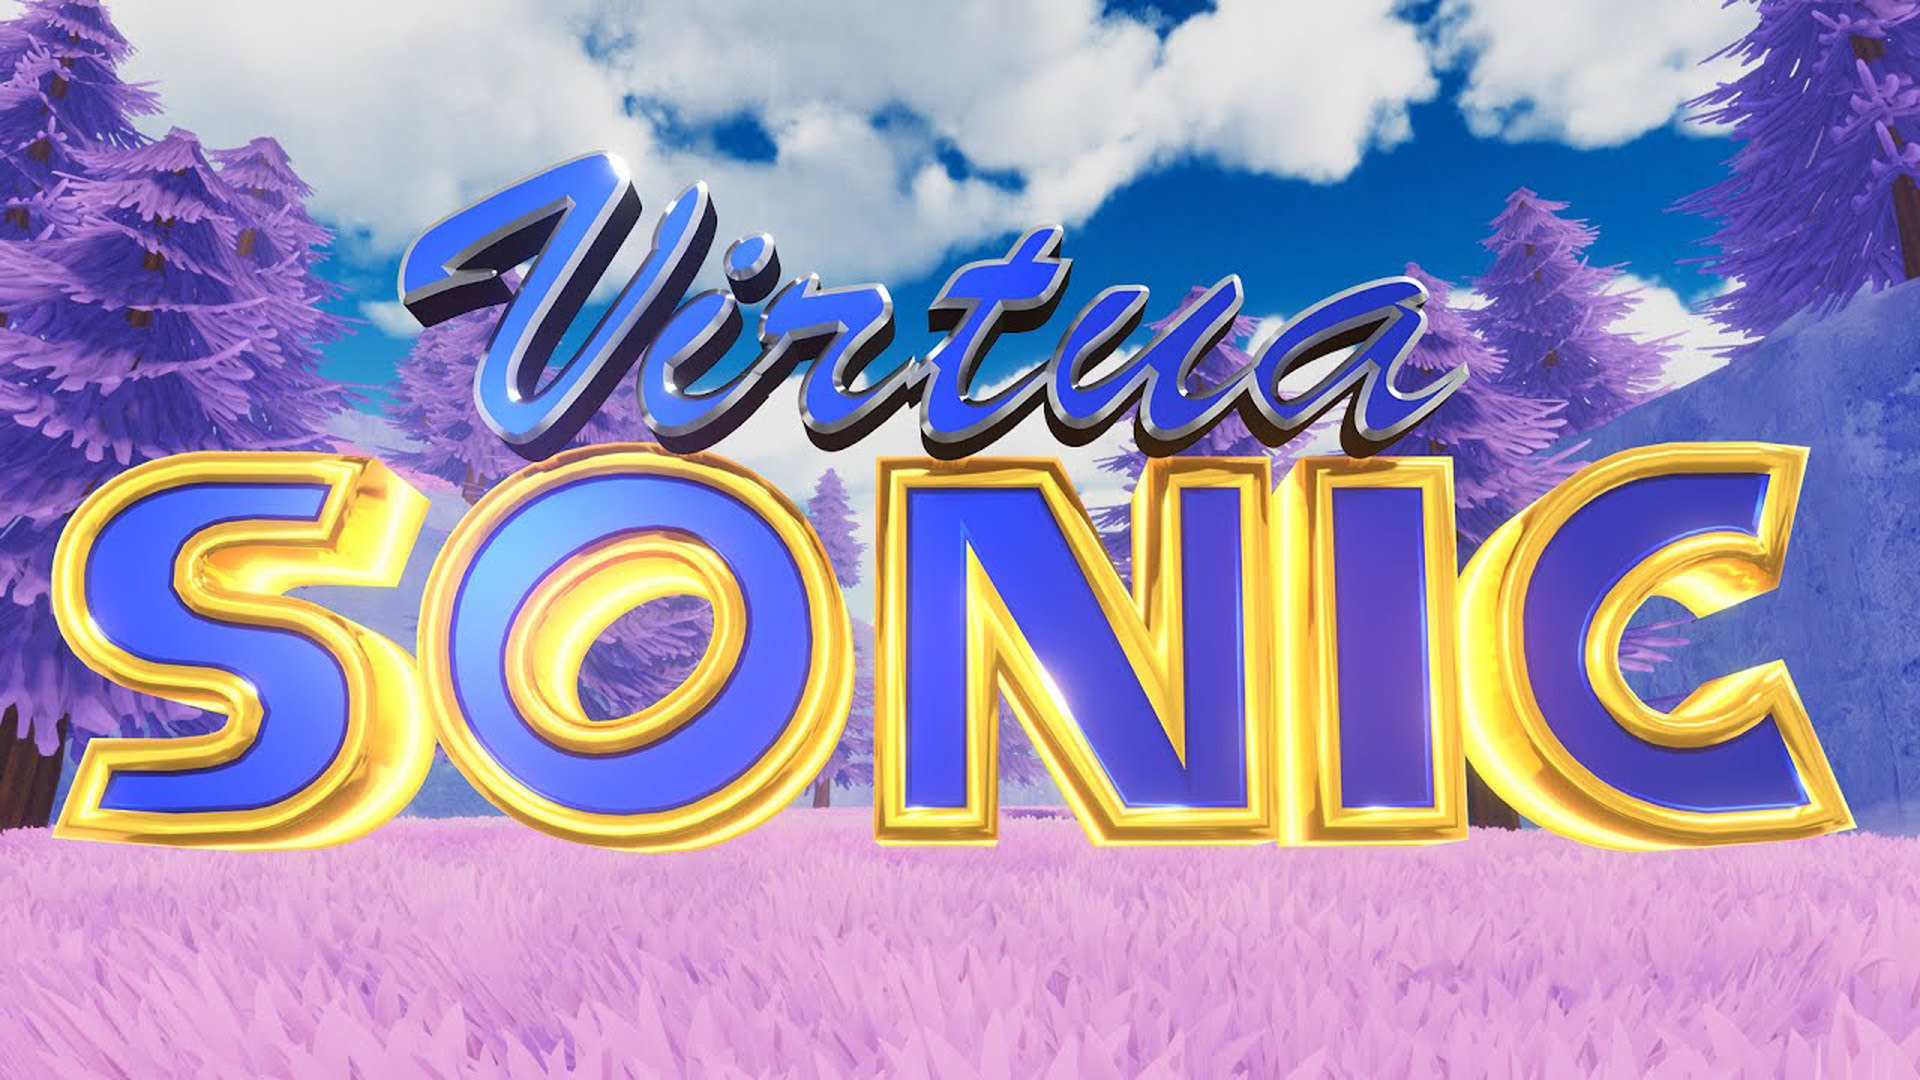 Virtua Sonic Fan Experience Brings Sonic the Hedgehog to VR